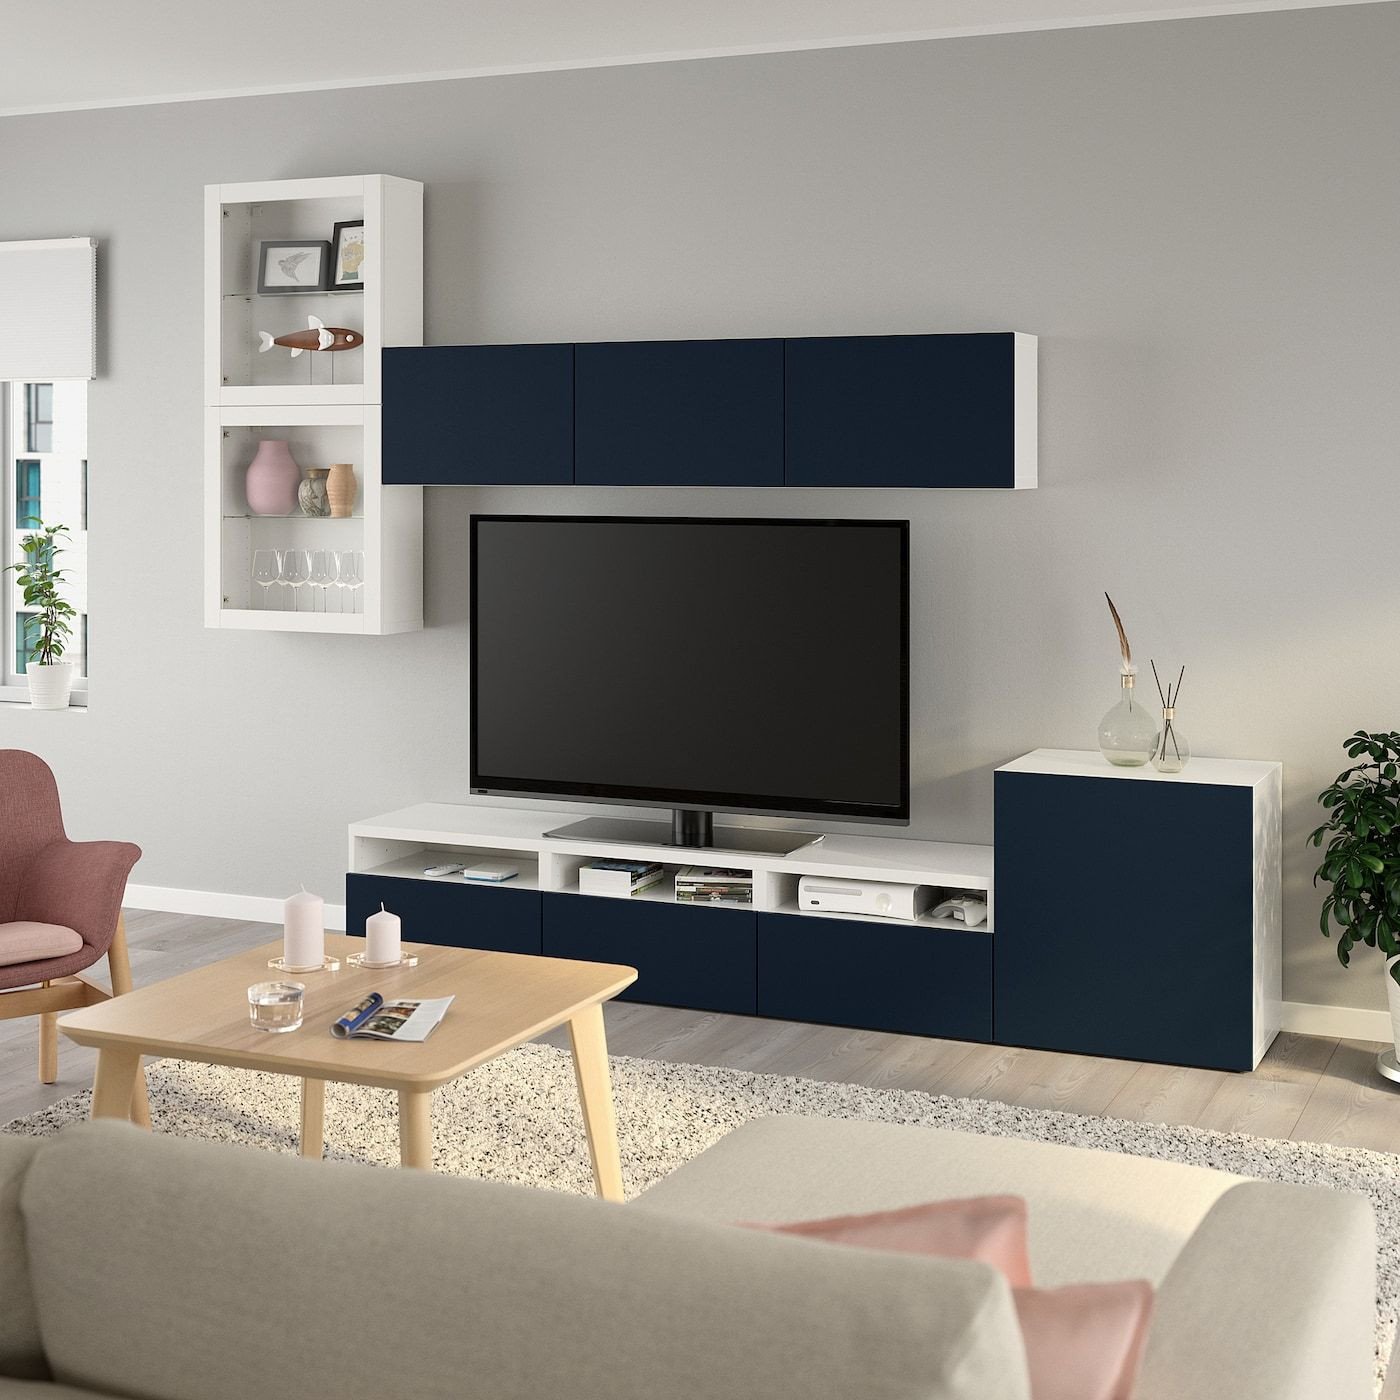 Table for Tv In Bedroom Fresh Ikea Best Tv Storage Bination Glass Doors White